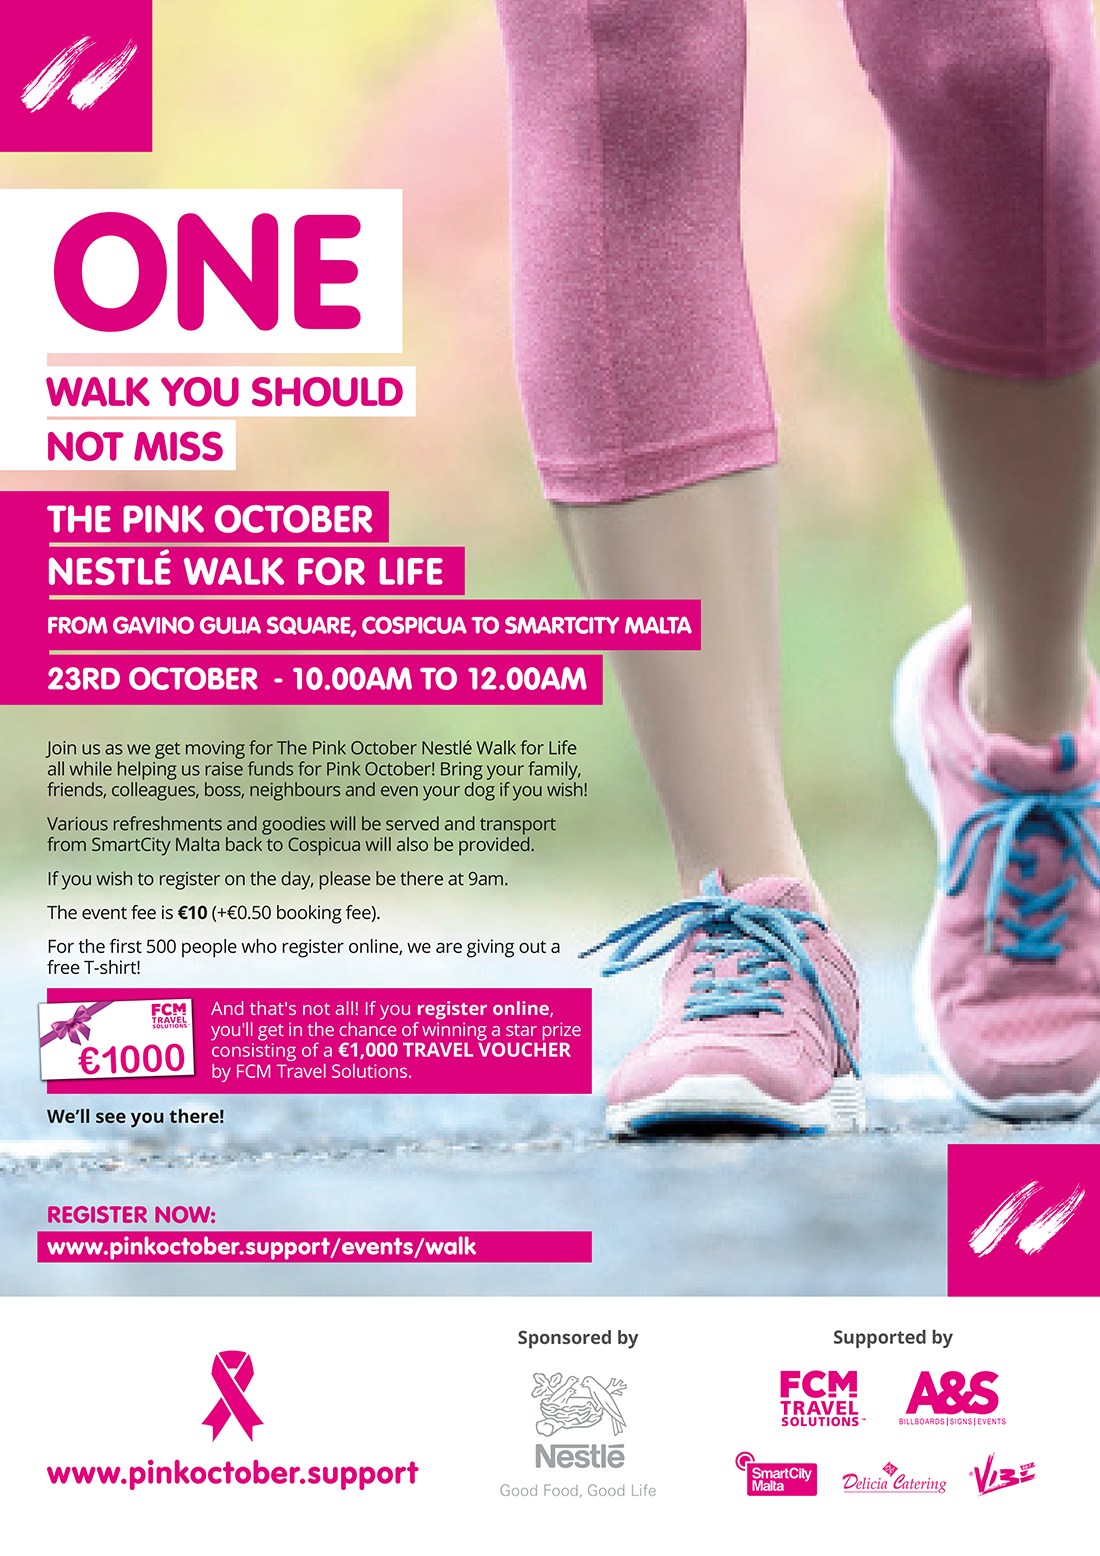 The Pink October Nestlé Walk for Life 2016 poster